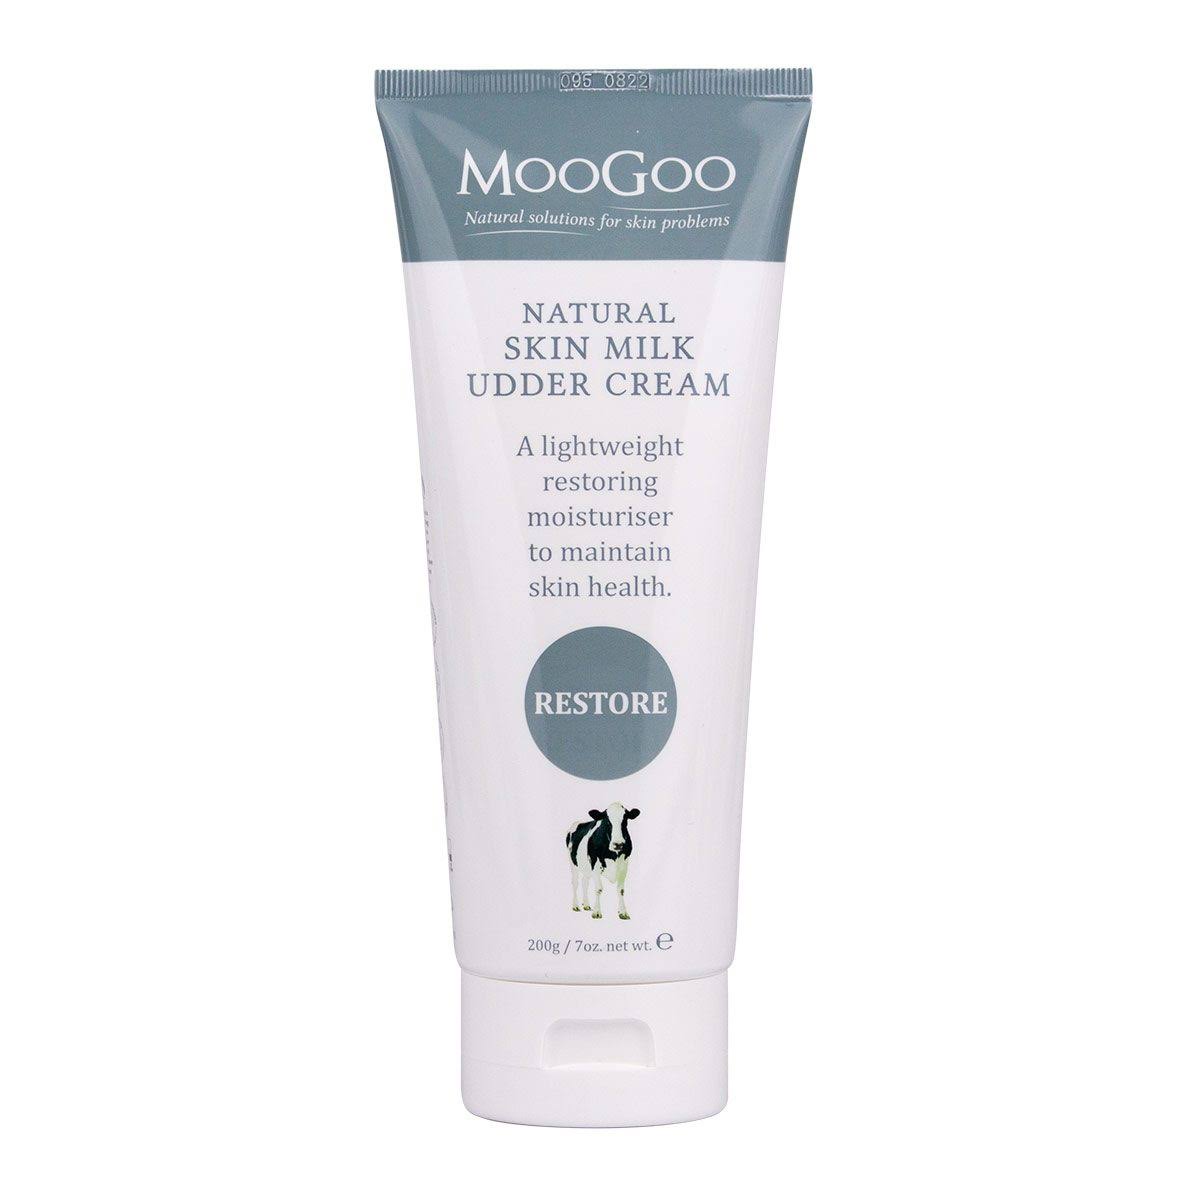 Moogoo Natural Skin Milk Udder Cream - 200g